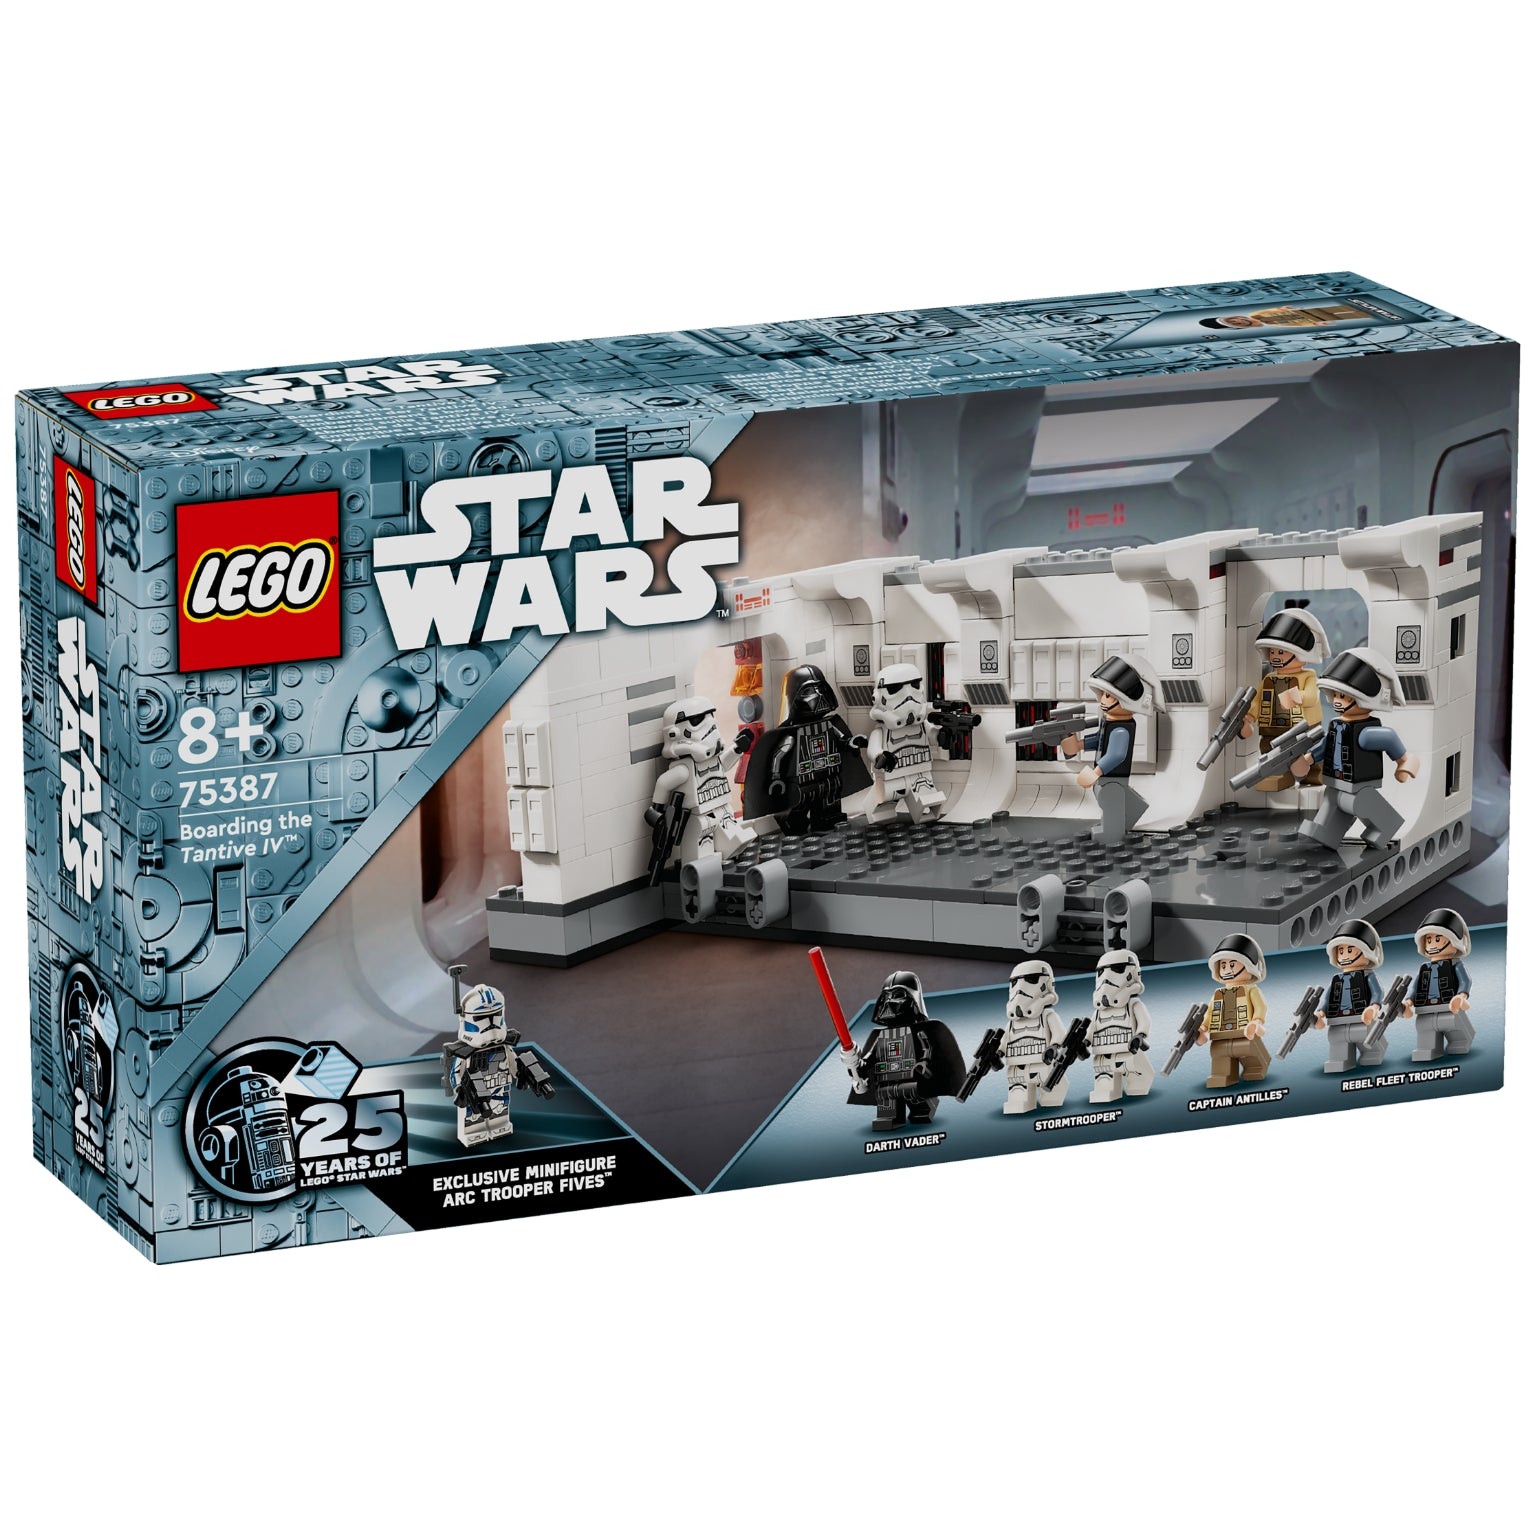 Lego 75387 Star Wars - Embarque na Tantive IV